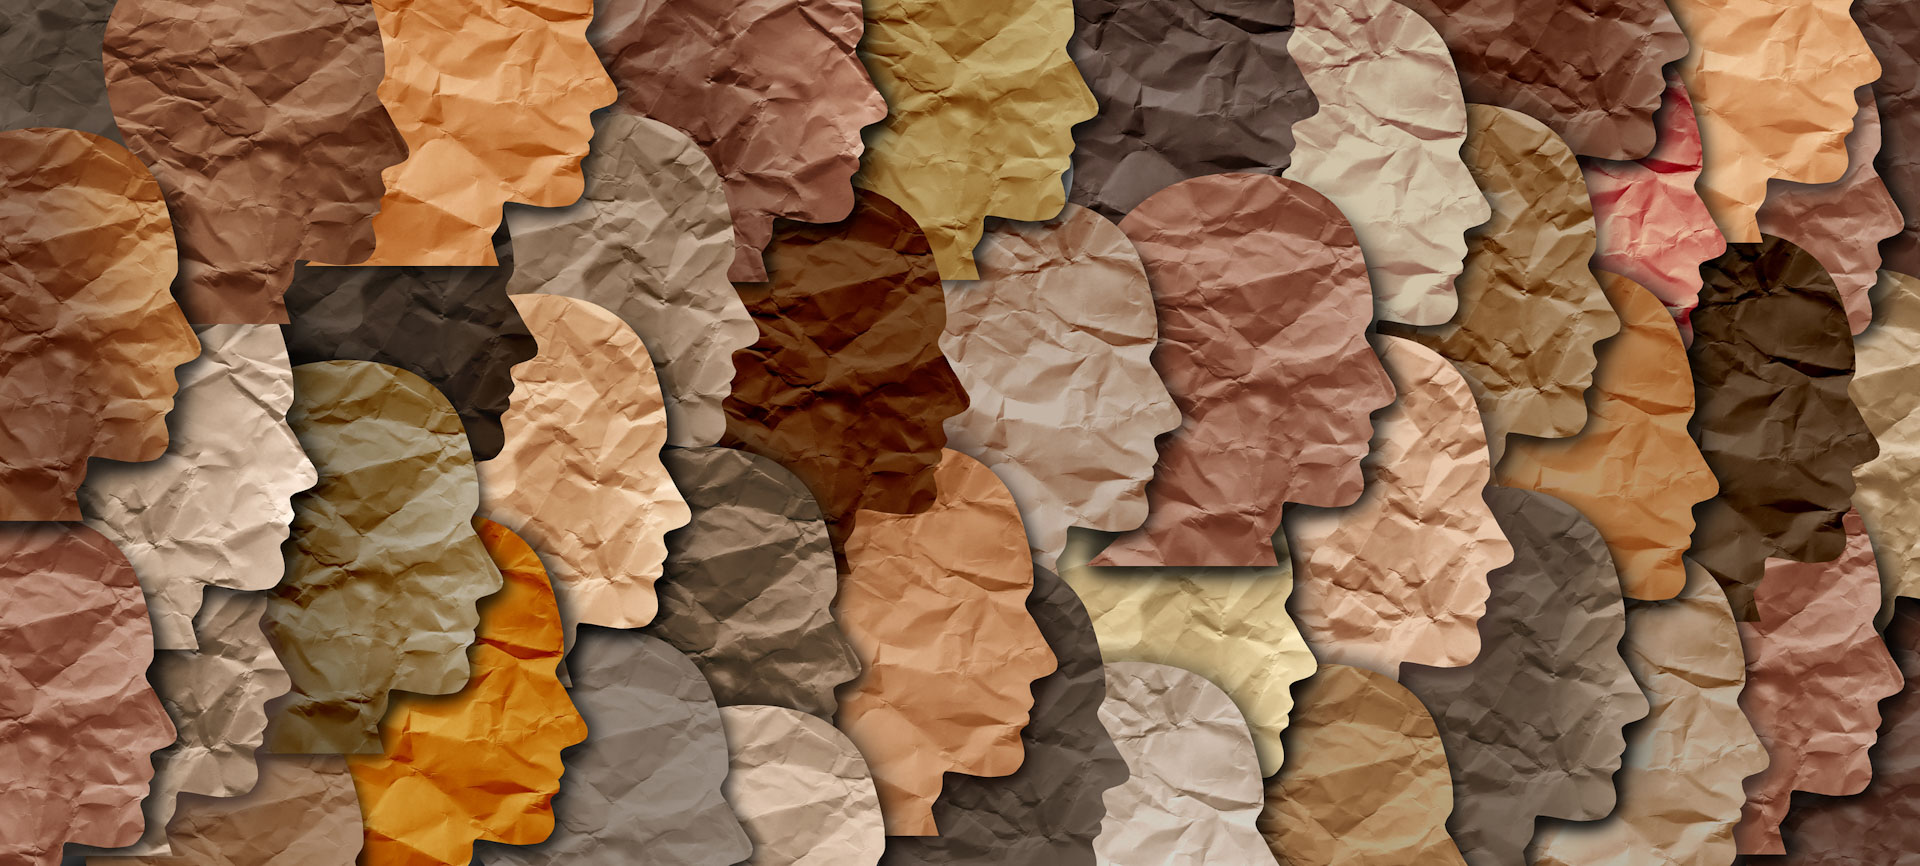 Multi-colored paper faces